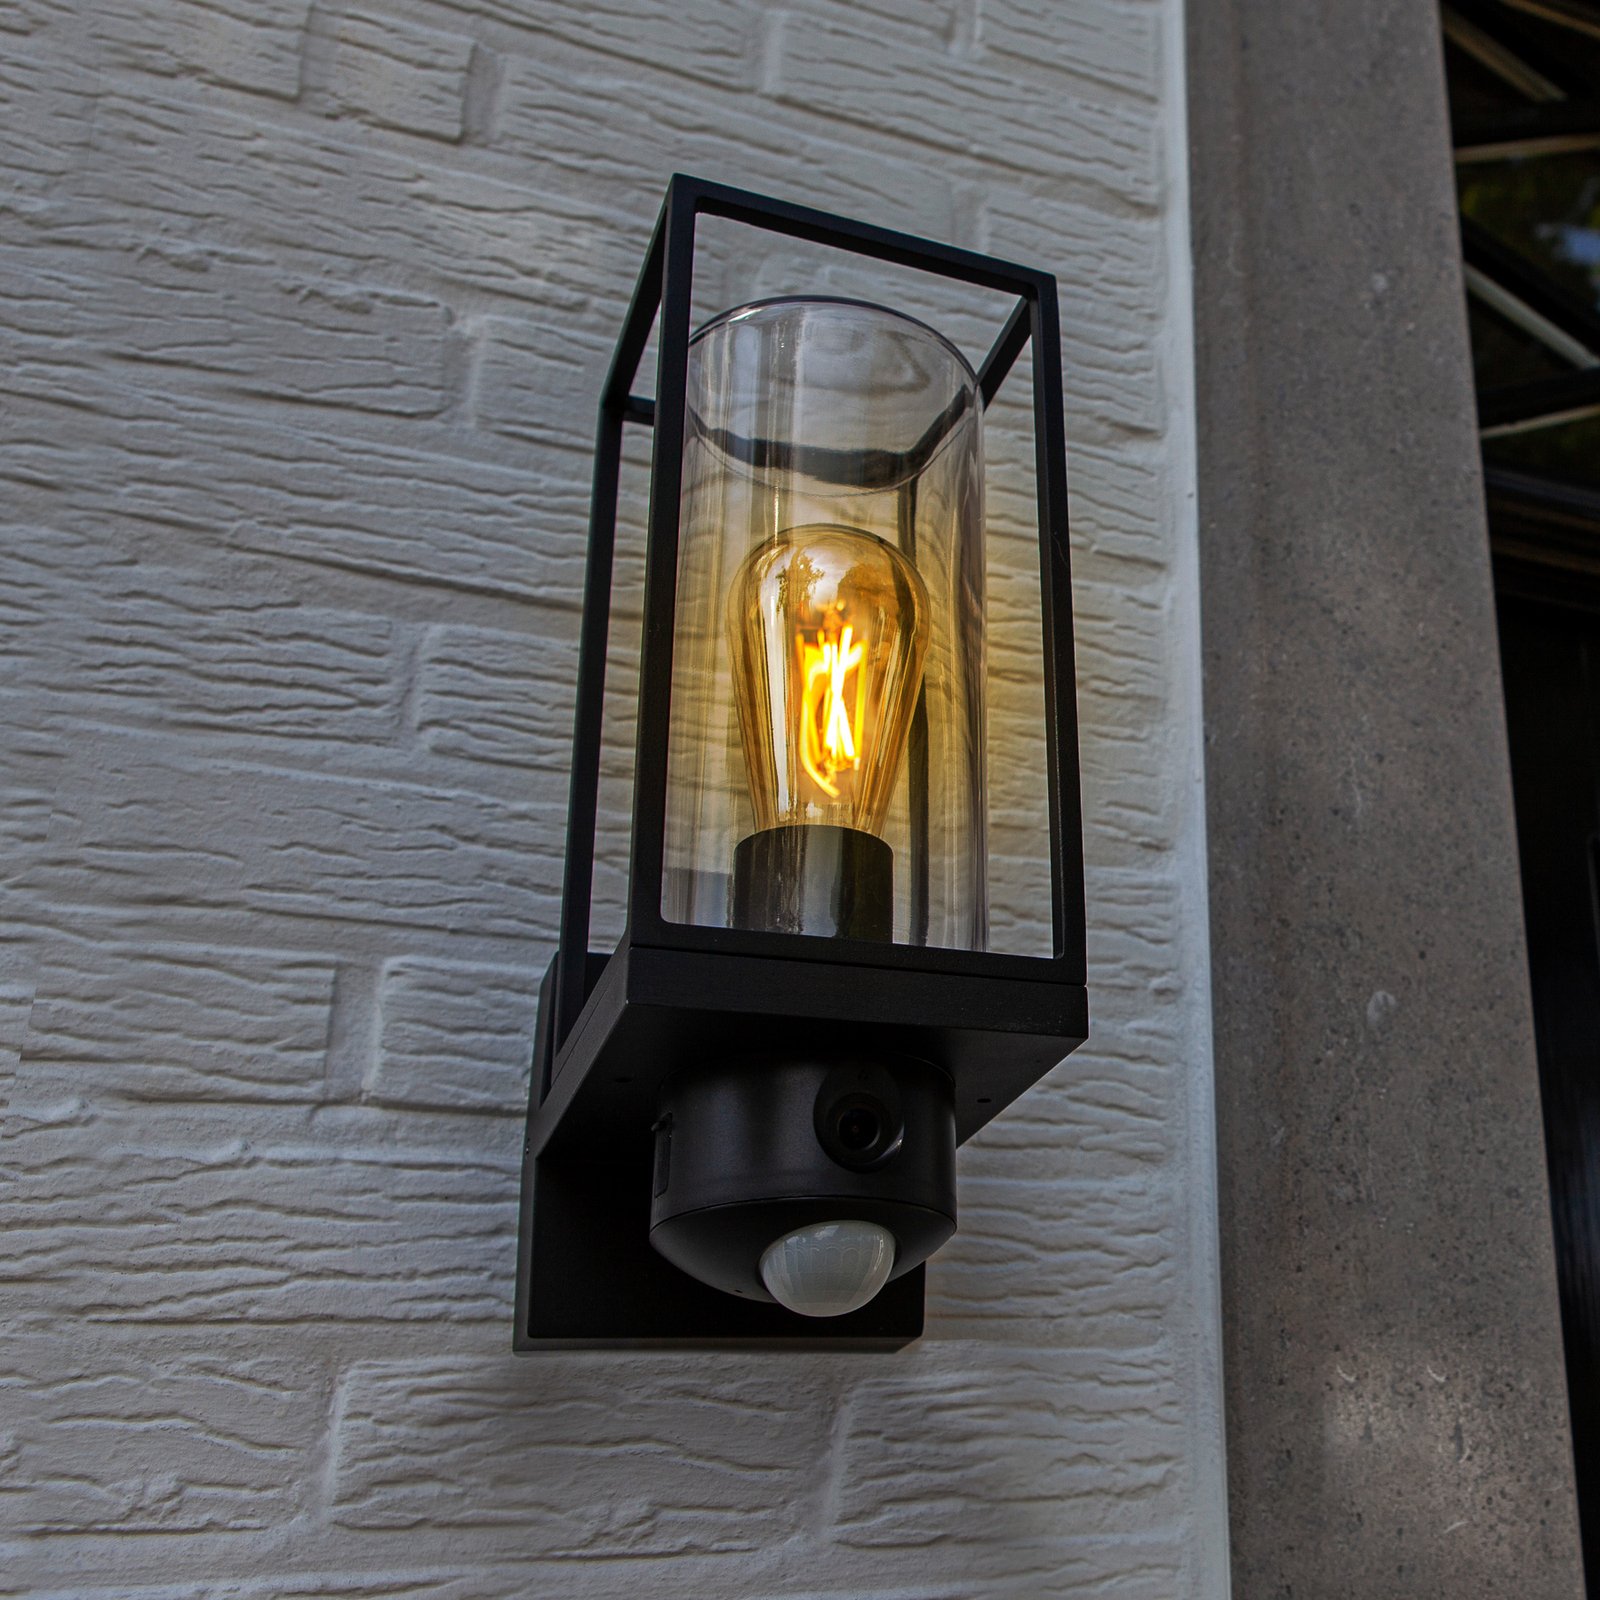 Flair wall light lampshade top 1-bulb camera